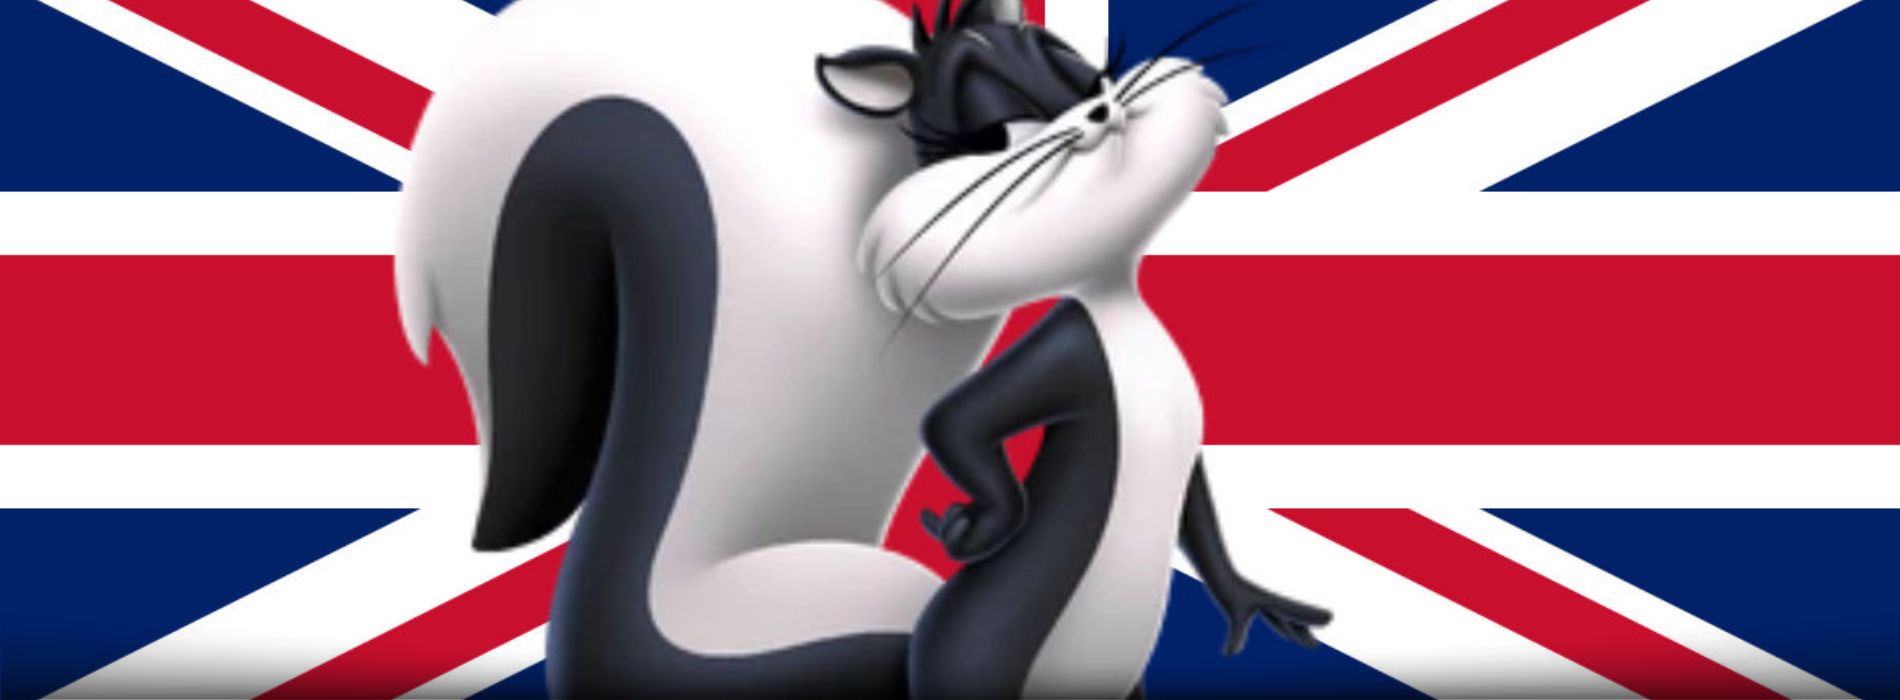 célèbres-dessins animés-chats-Penelope Pussycat (Looney Tunes